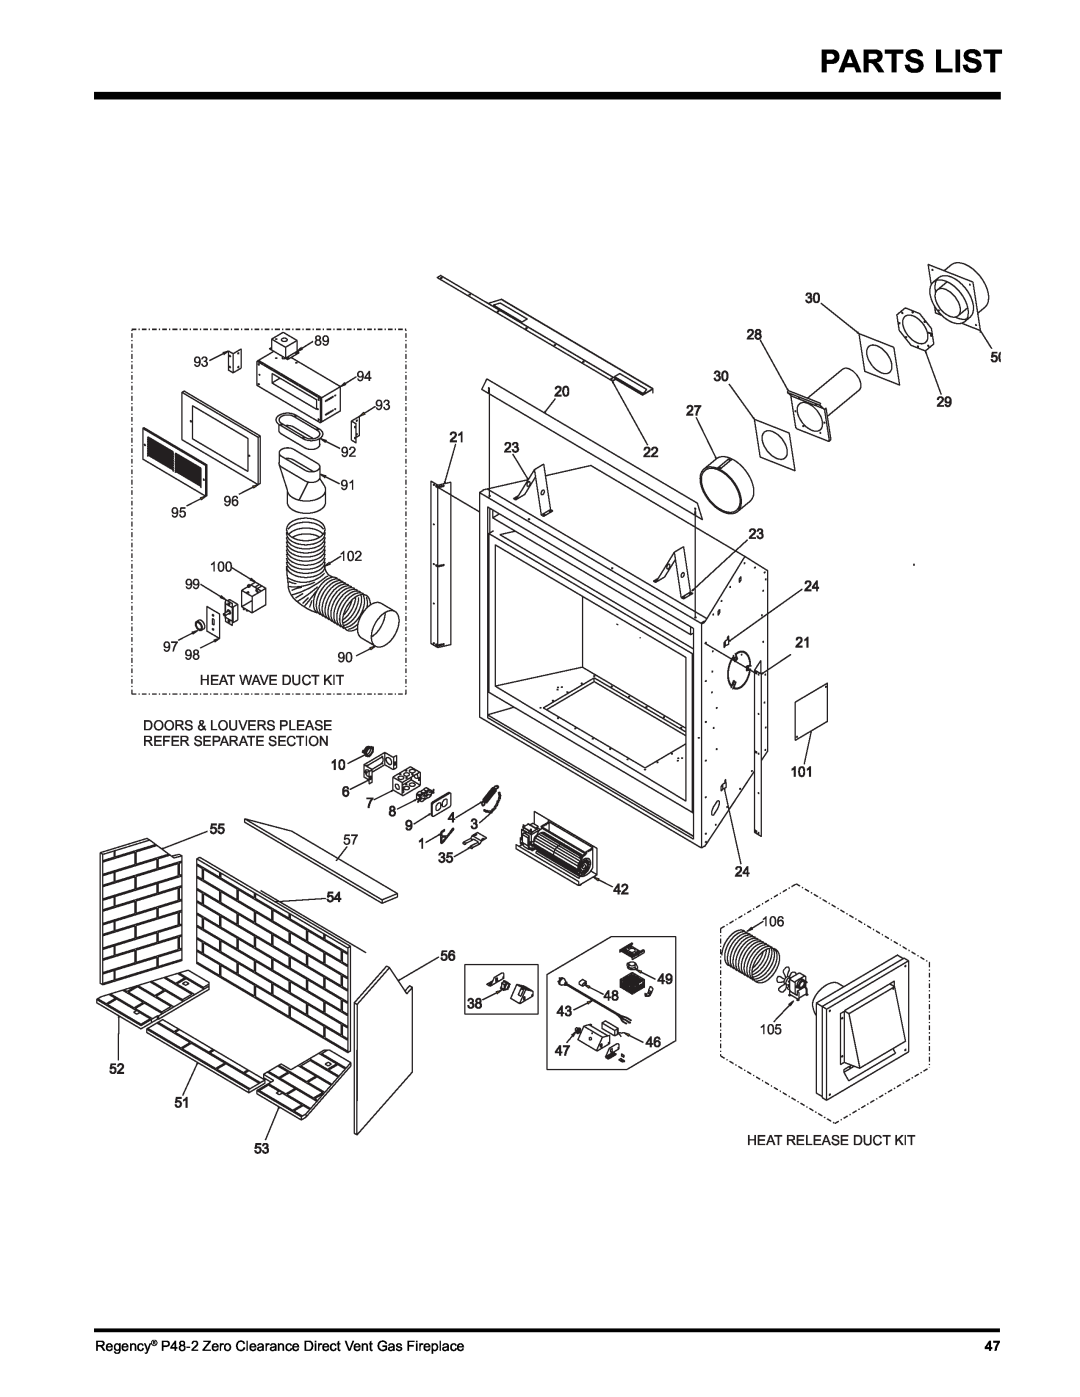 Regency P48-2 installation manual Parts List, Heat Wave Duct Kit 